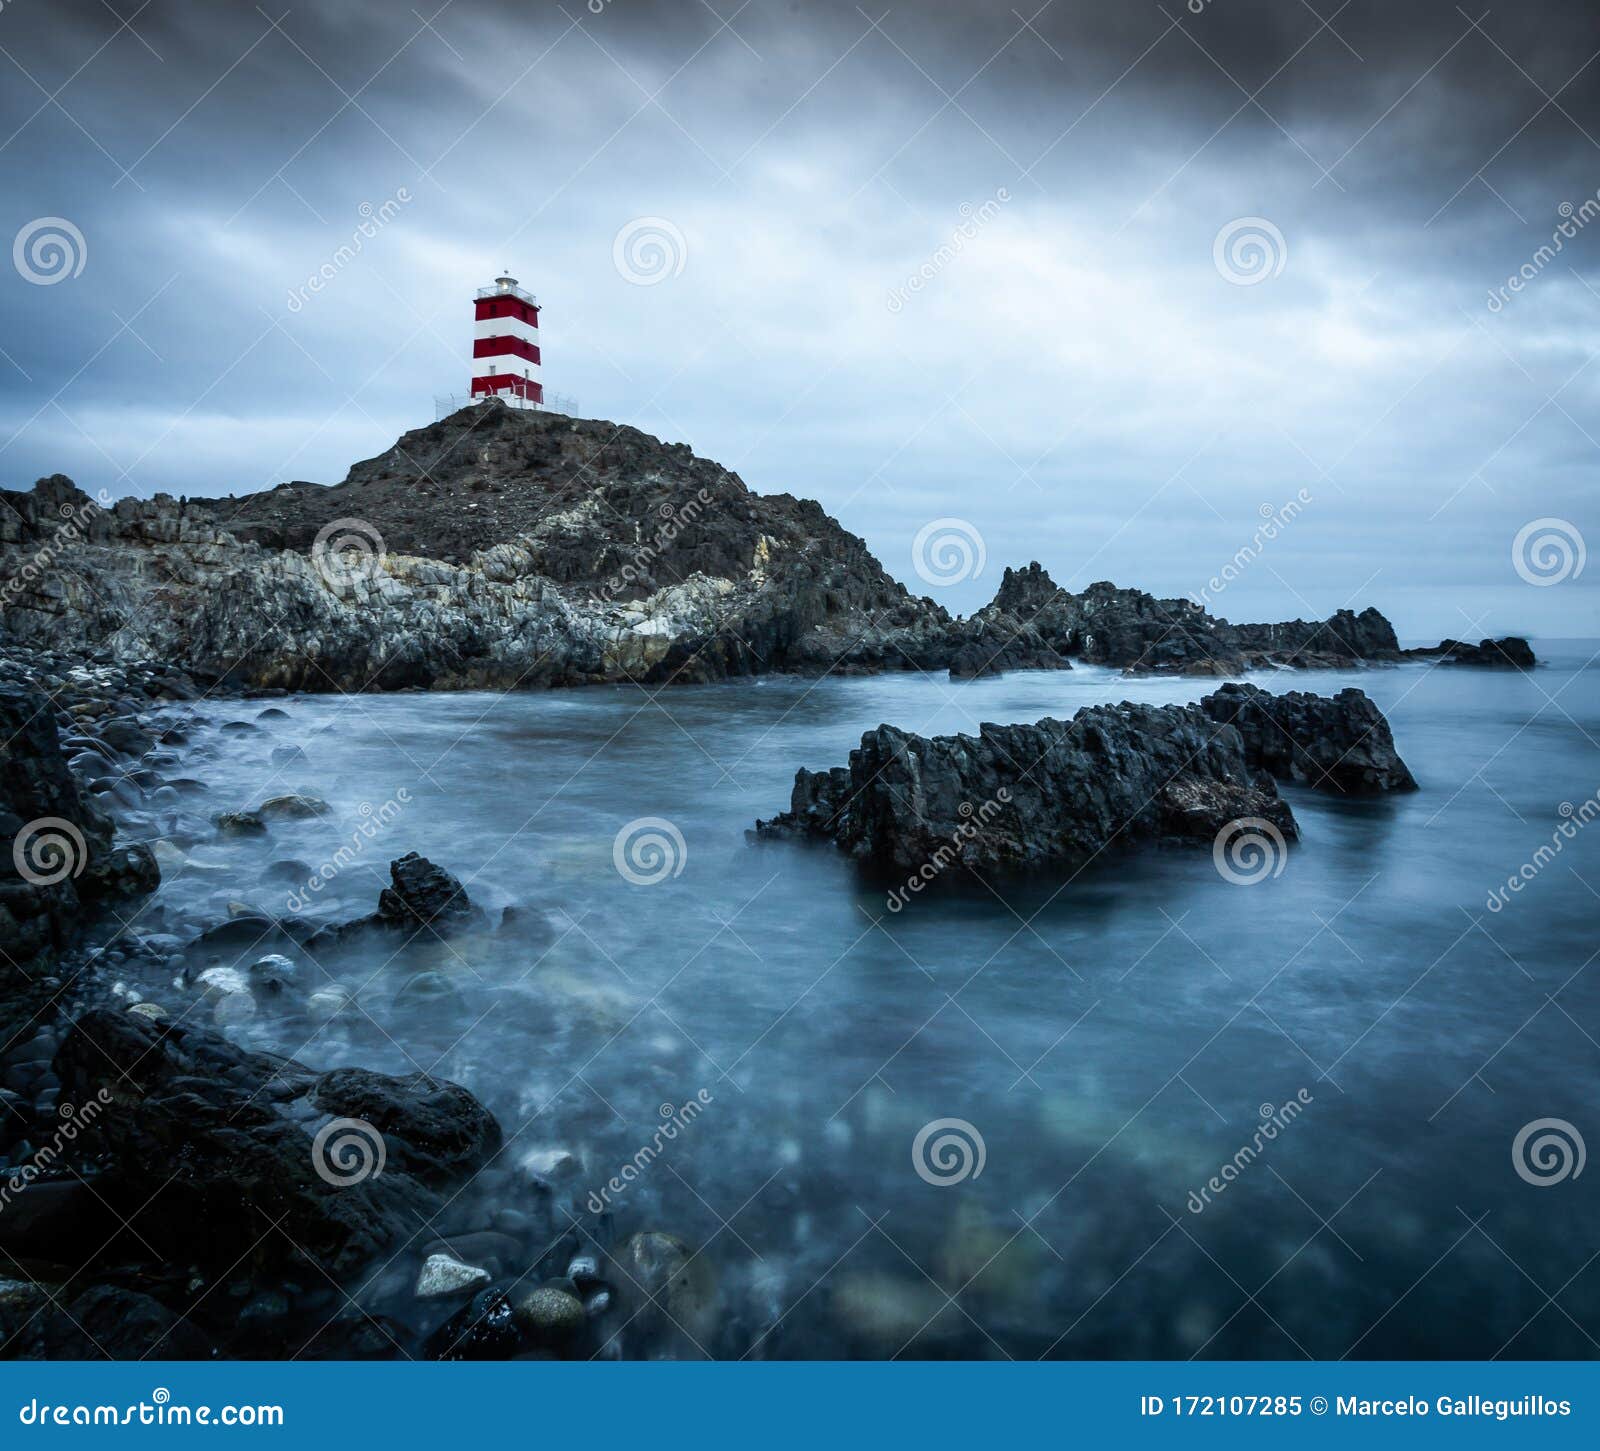 caldera lighthouse before nightfall